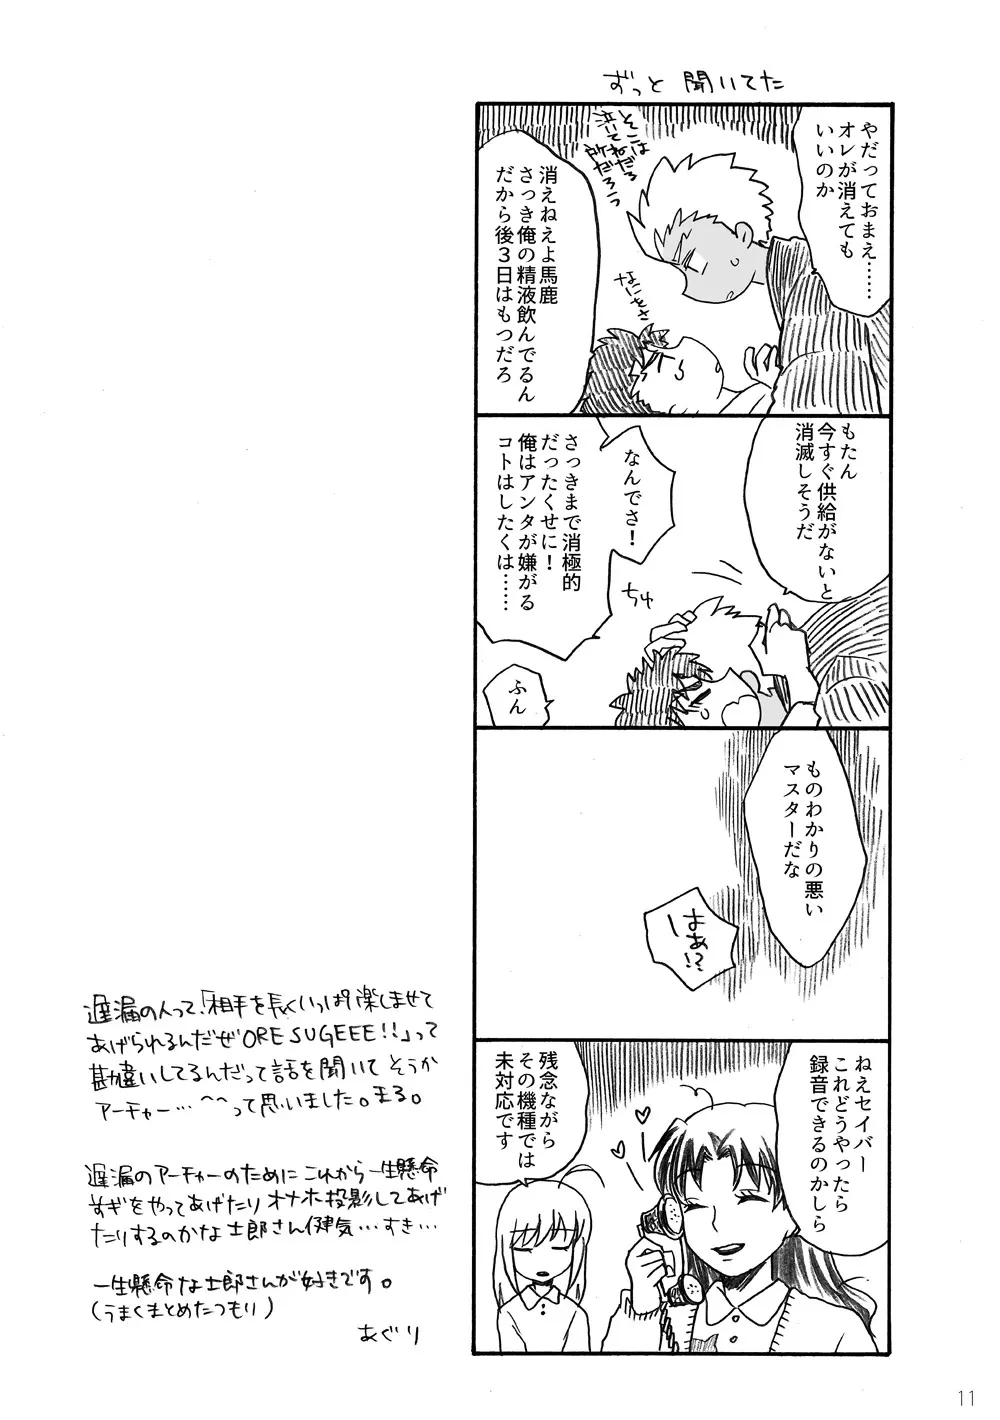 弓士本 - page73